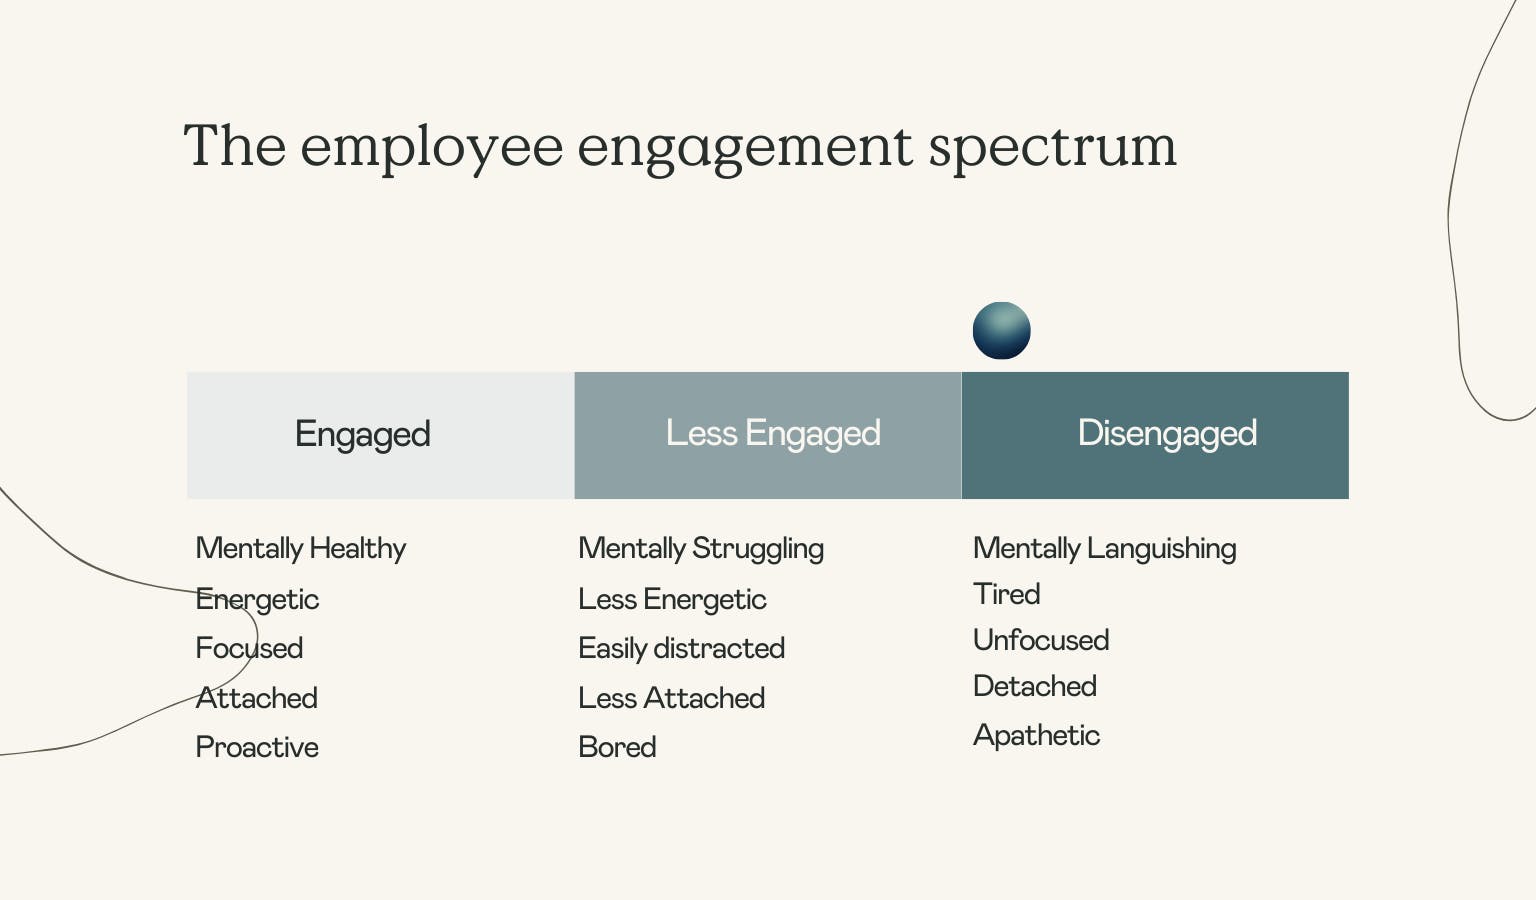 The employee engagement spectrum